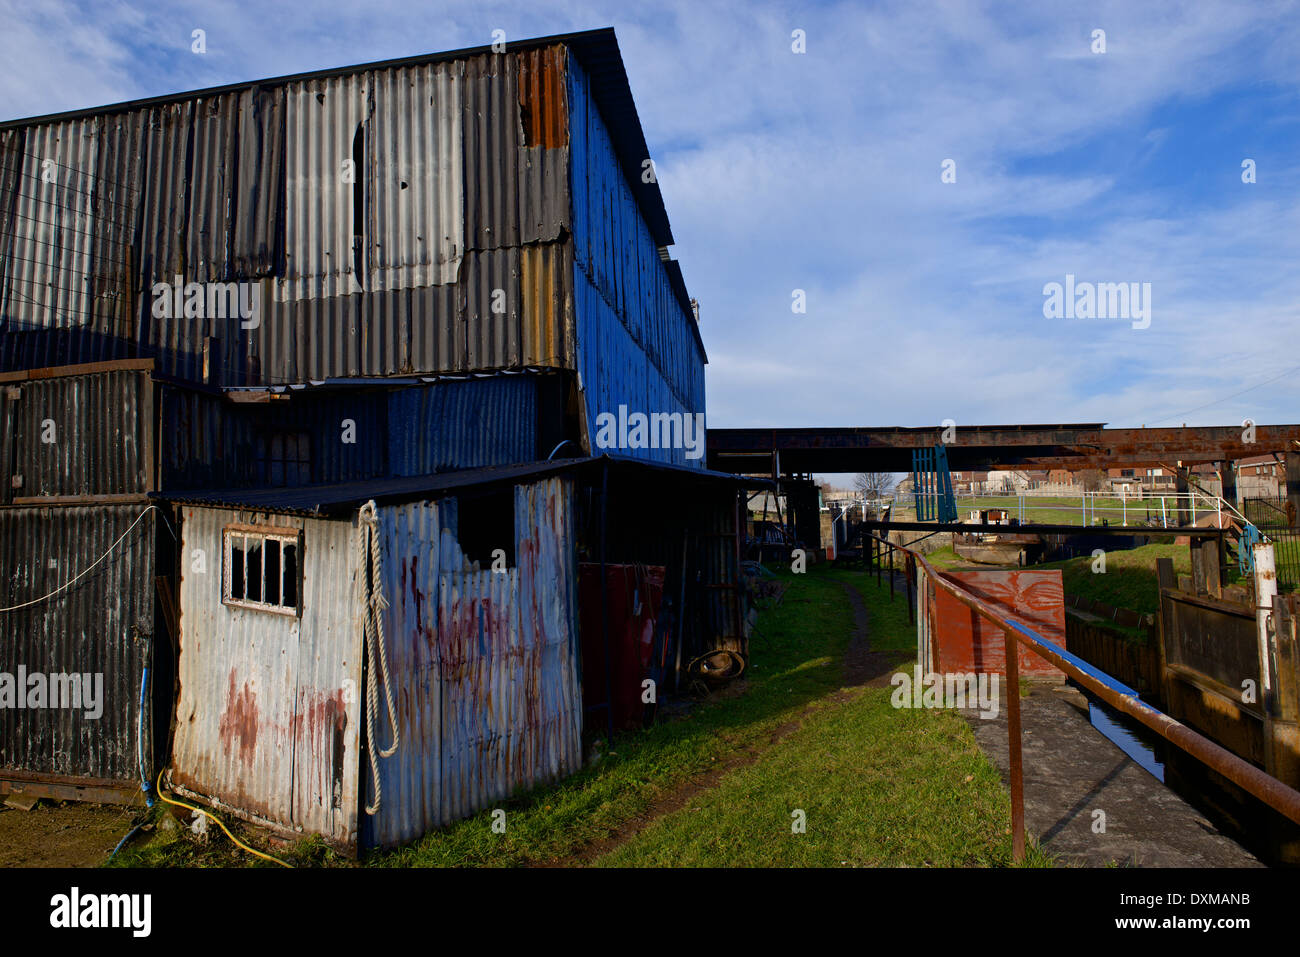 A ramshackle dilapidated rundown corrugated steel industrial building. Industrial decline concept Stock Photo